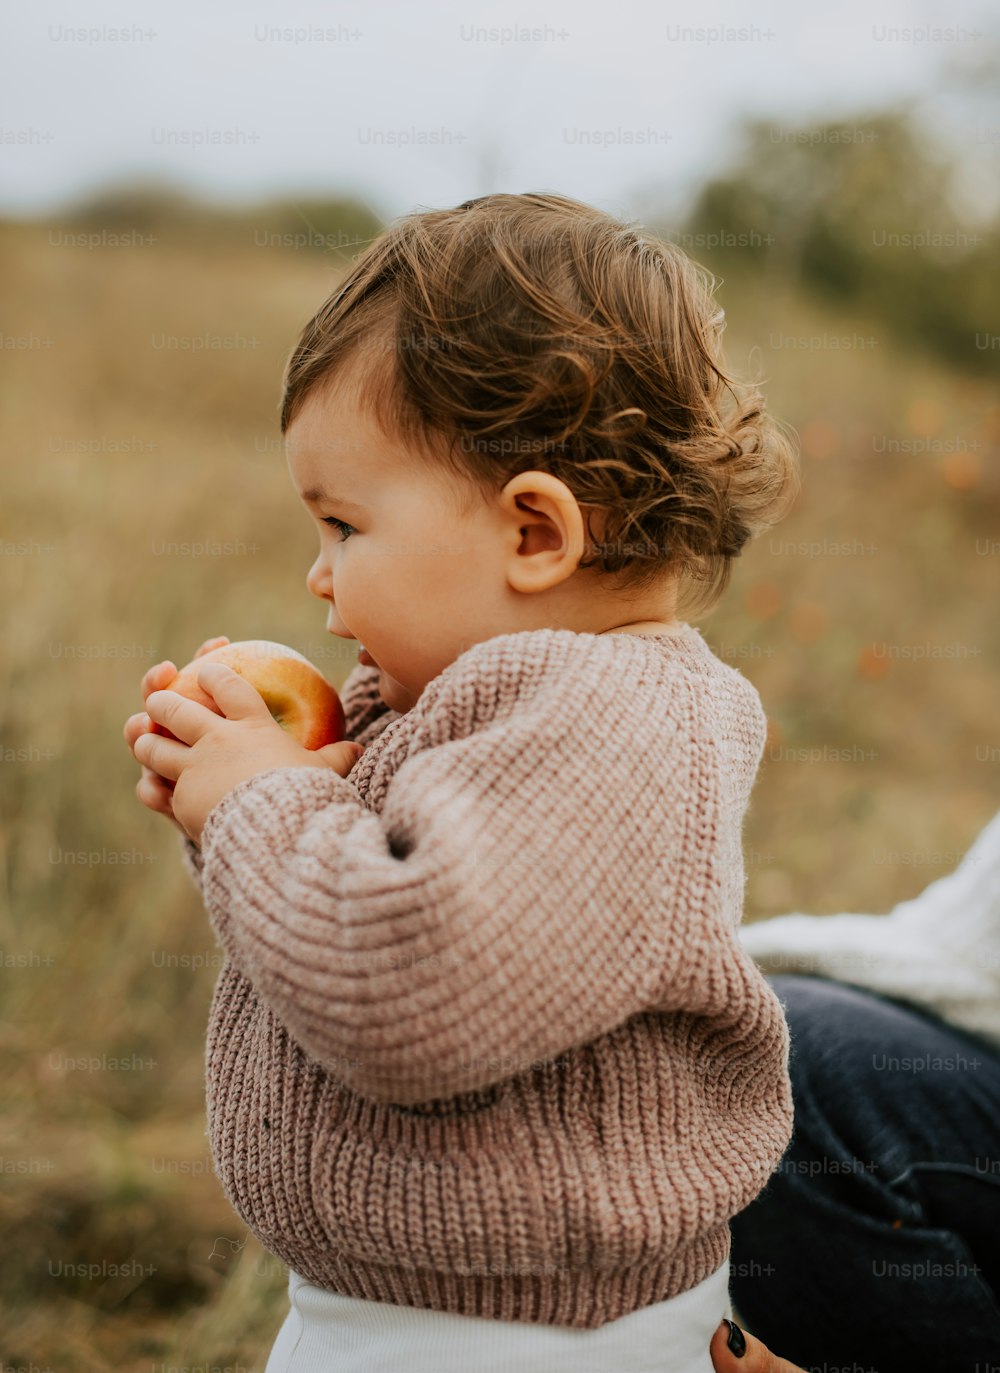 a little girl eating an apple in a field